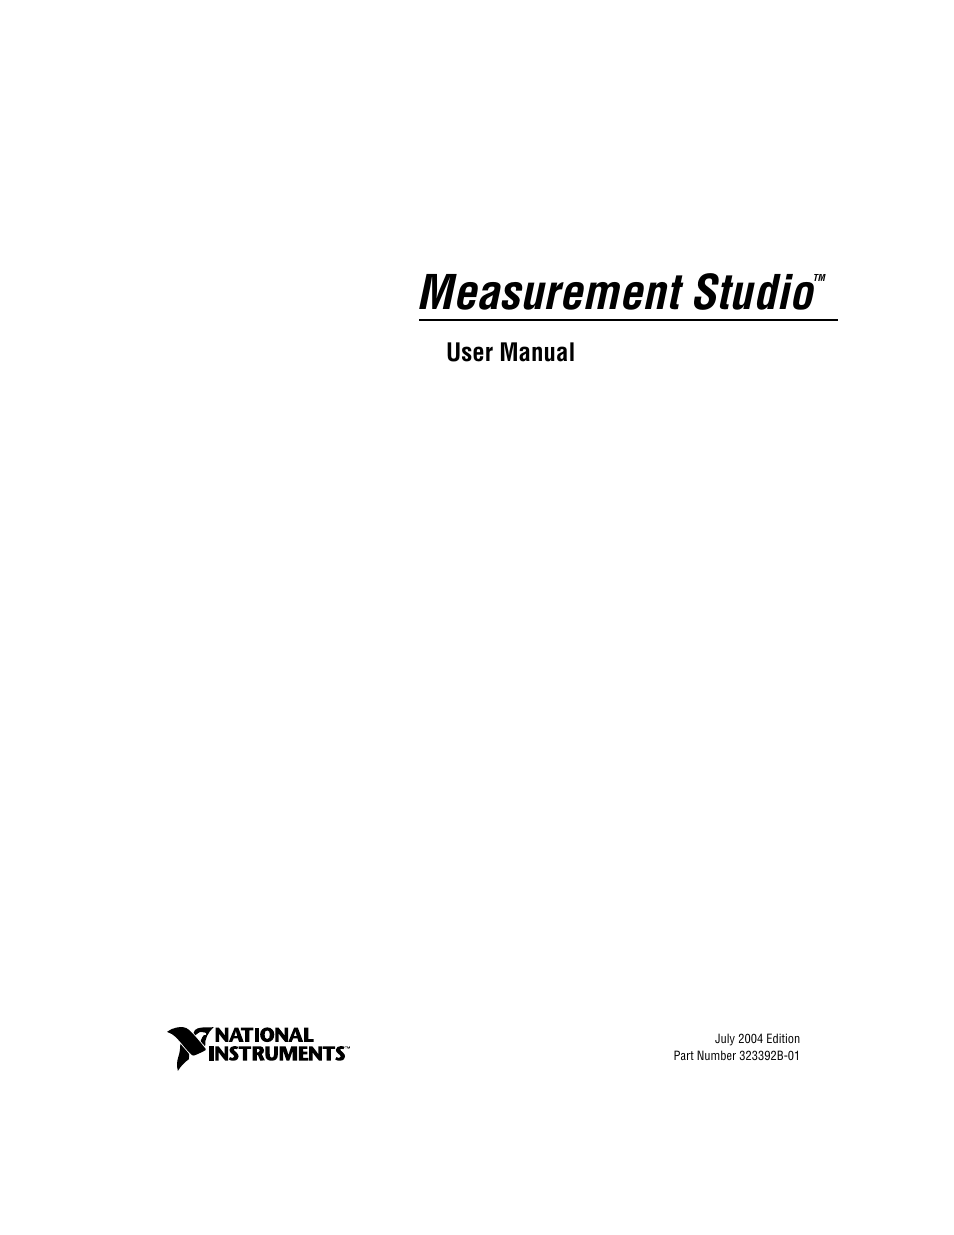 National Instruments Measurement Studio User Manual | 66 pages